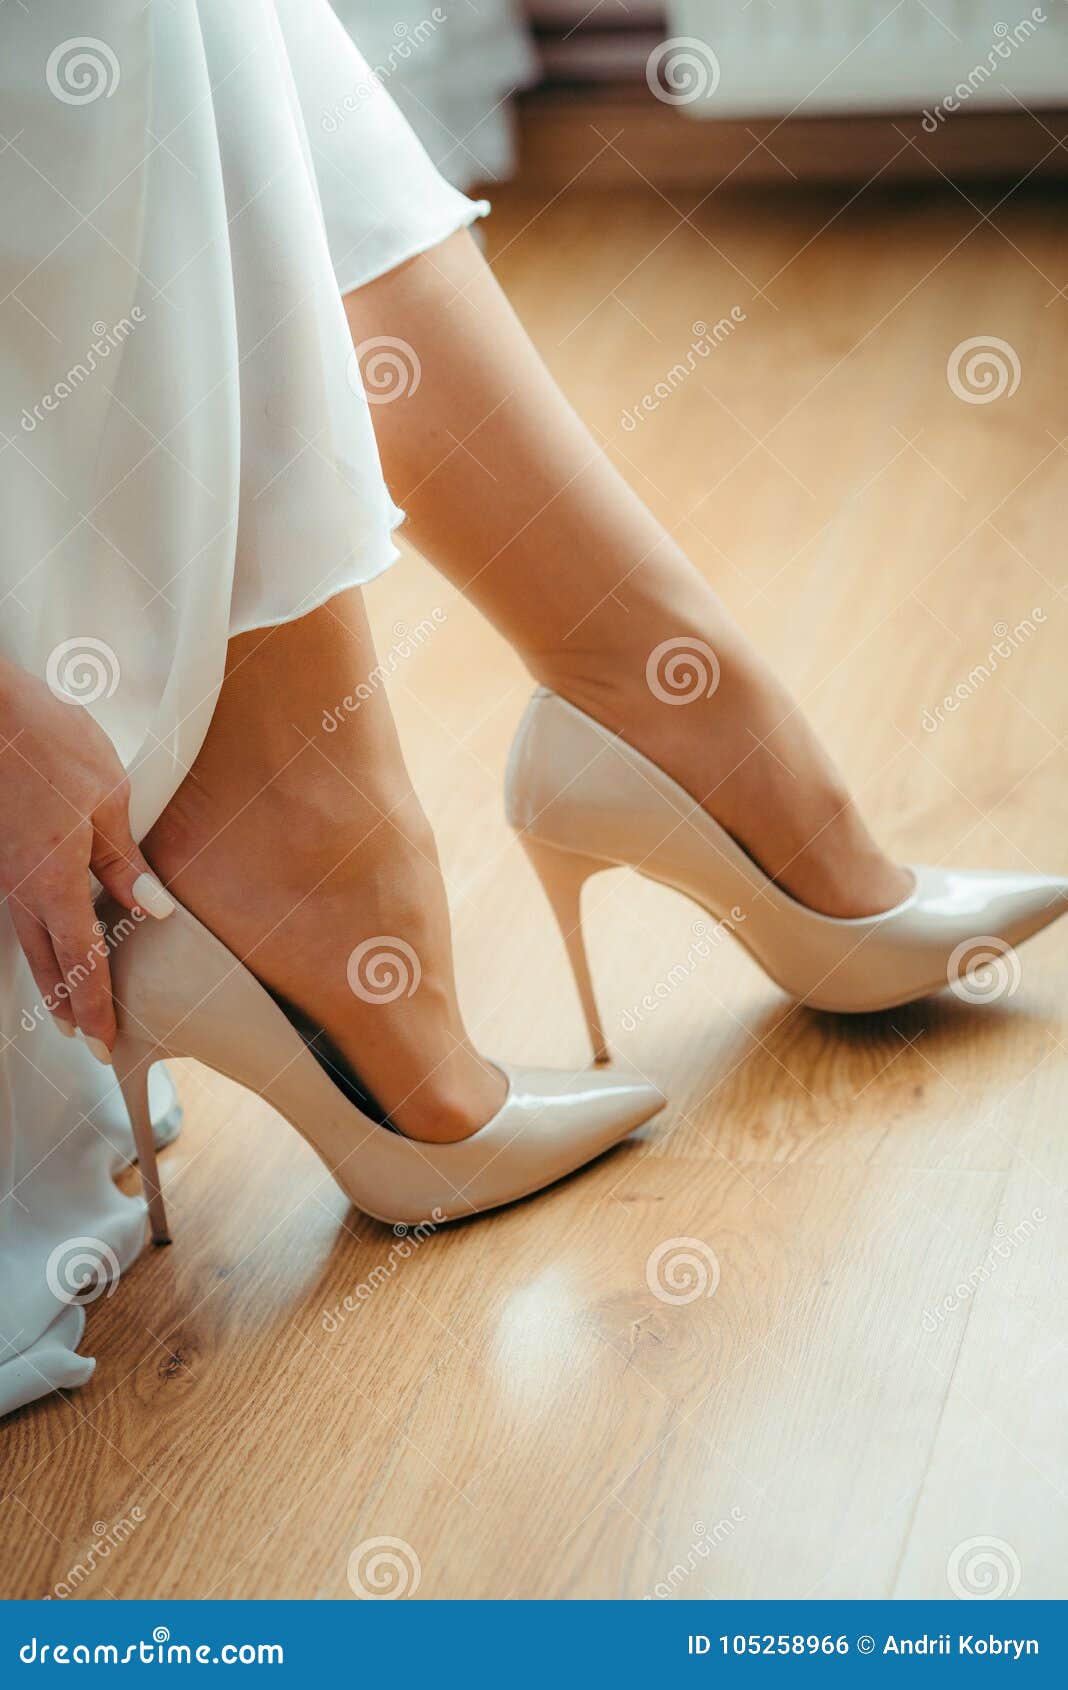 Brides red sole high heels stock image. Image of elegance - 30399097